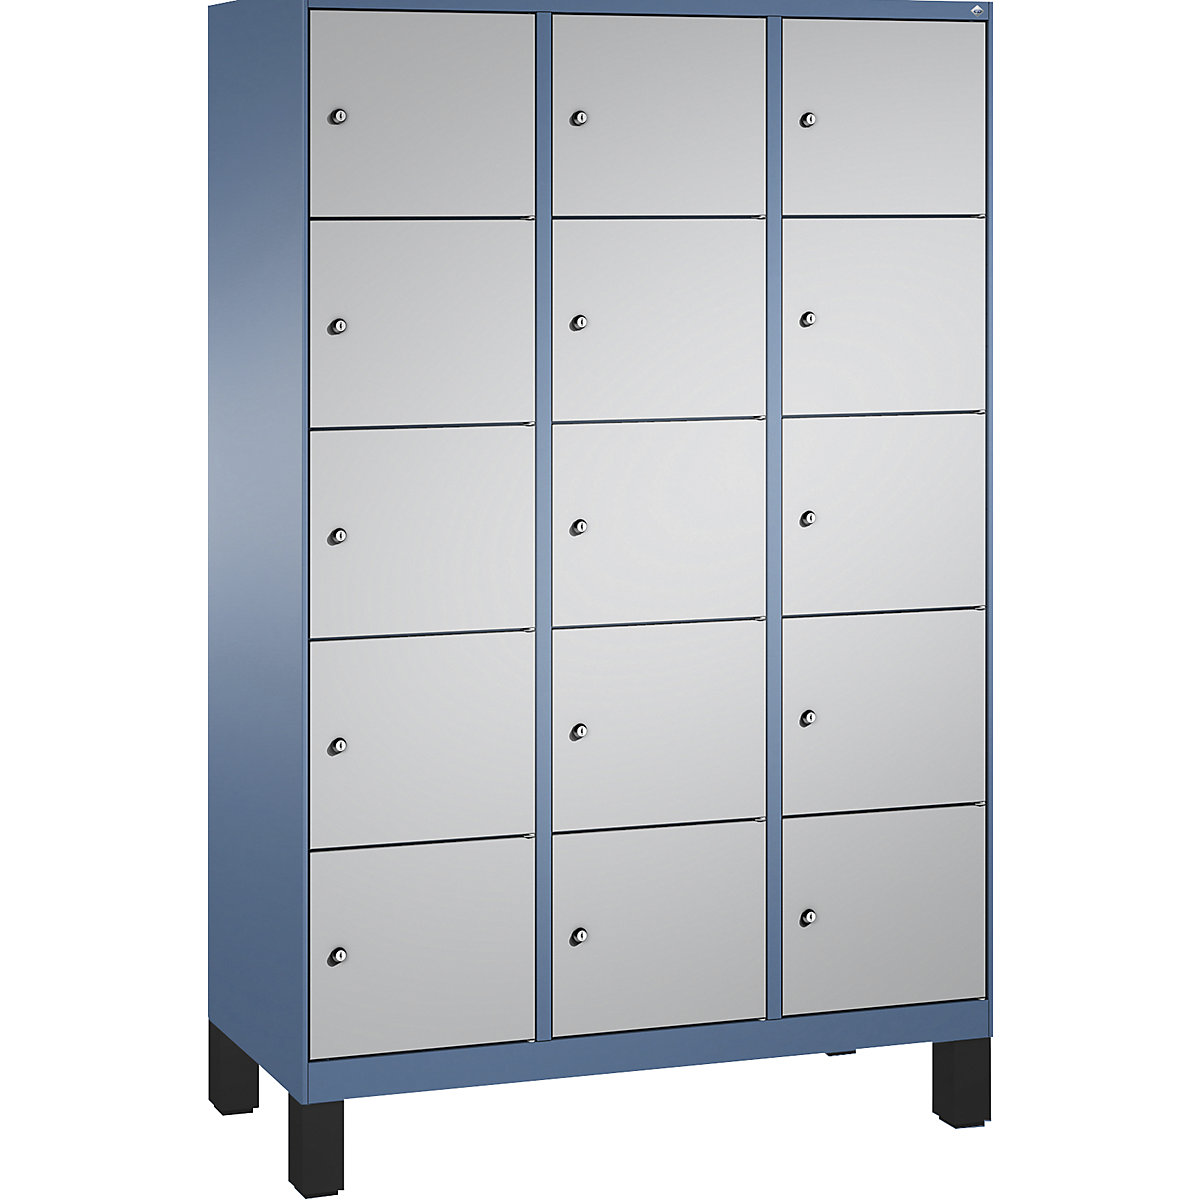 Armário de cacifos EVOLO, com pés – C+P, 3 compartimentos, 5 cacifos cada, largura do compartimento 400 mm, azul distante / cinza alumínio-6